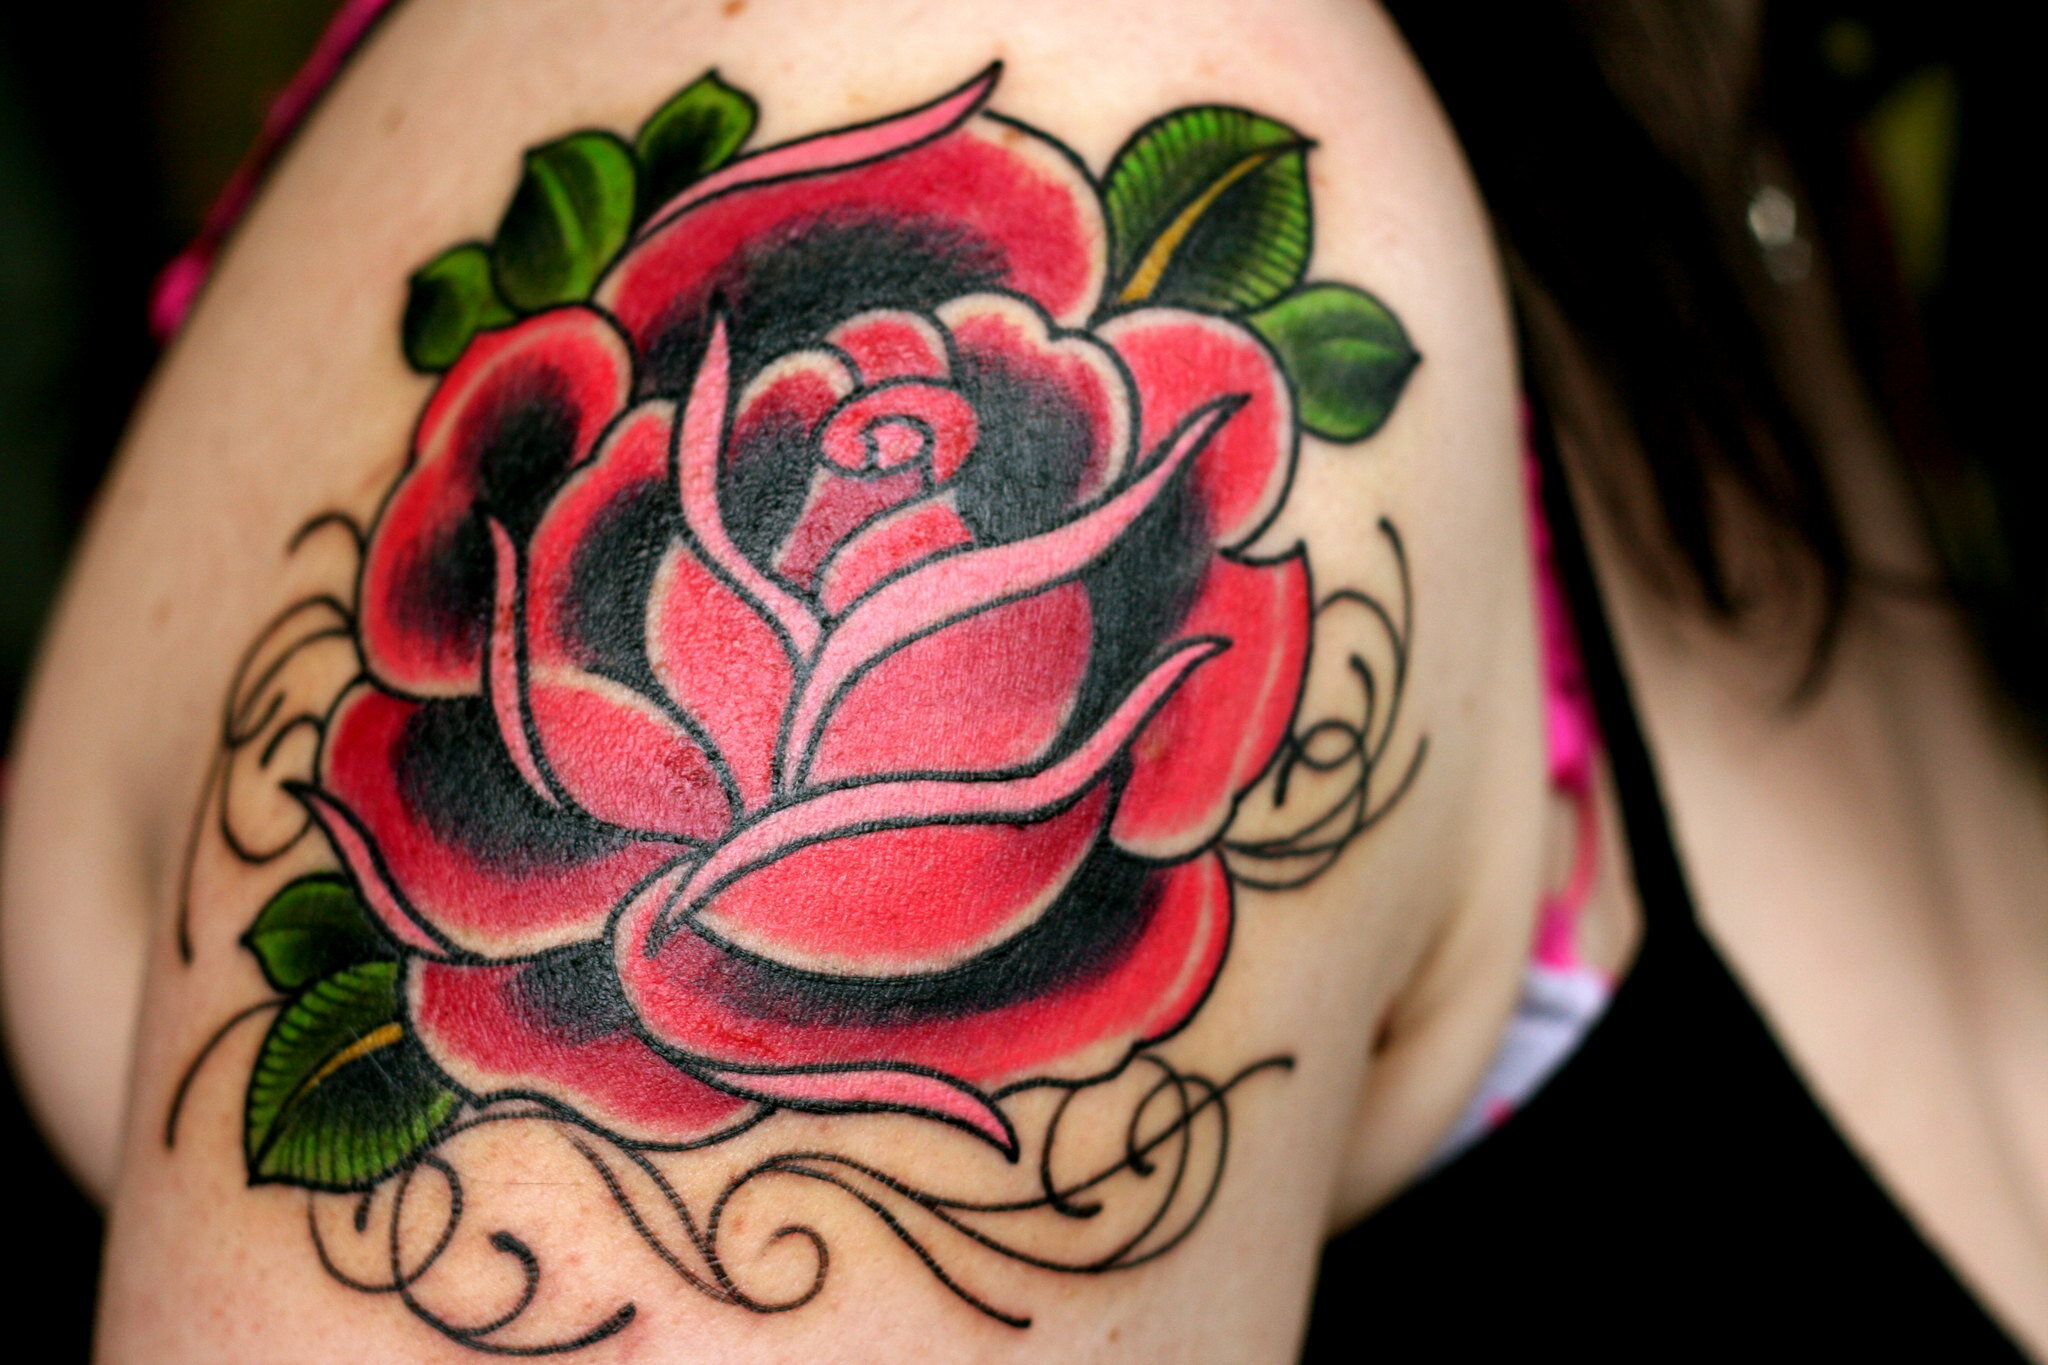 Tattooasha - The coverup of little Tigger underneath this new rose tattoo🌹💙  • • • • #bluerose #rose #love #florist #flower #bluetattoo #colourtattoo # rosetattoo #coverup #coveruptattoo #tattoo #tattoos #ink #tattooartist  #inked #tattooart #